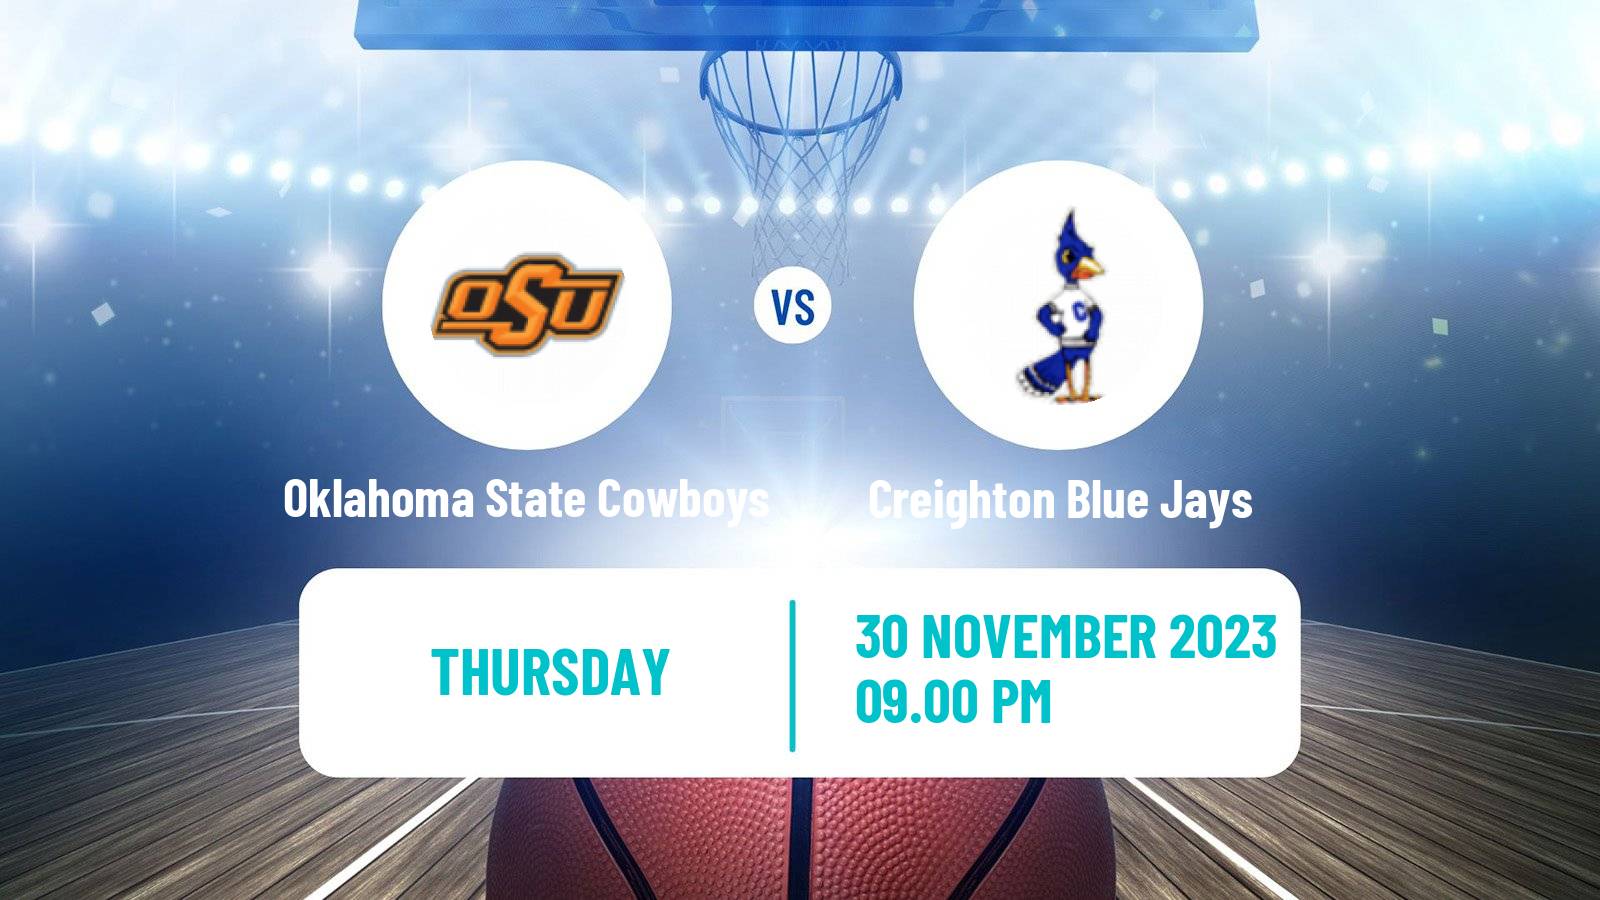 Basketball NCAA College Basketball Oklahoma State Cowboys - Creighton Blue Jays